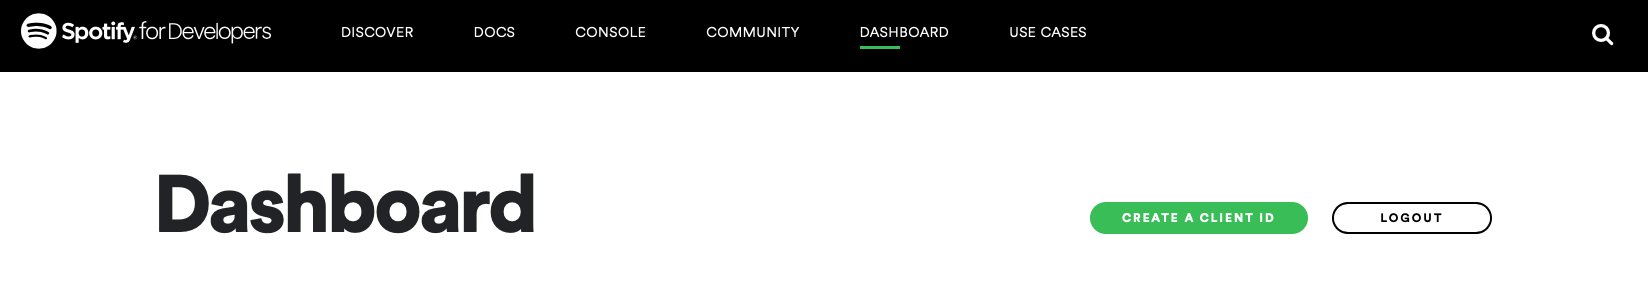 Spotify dashboard